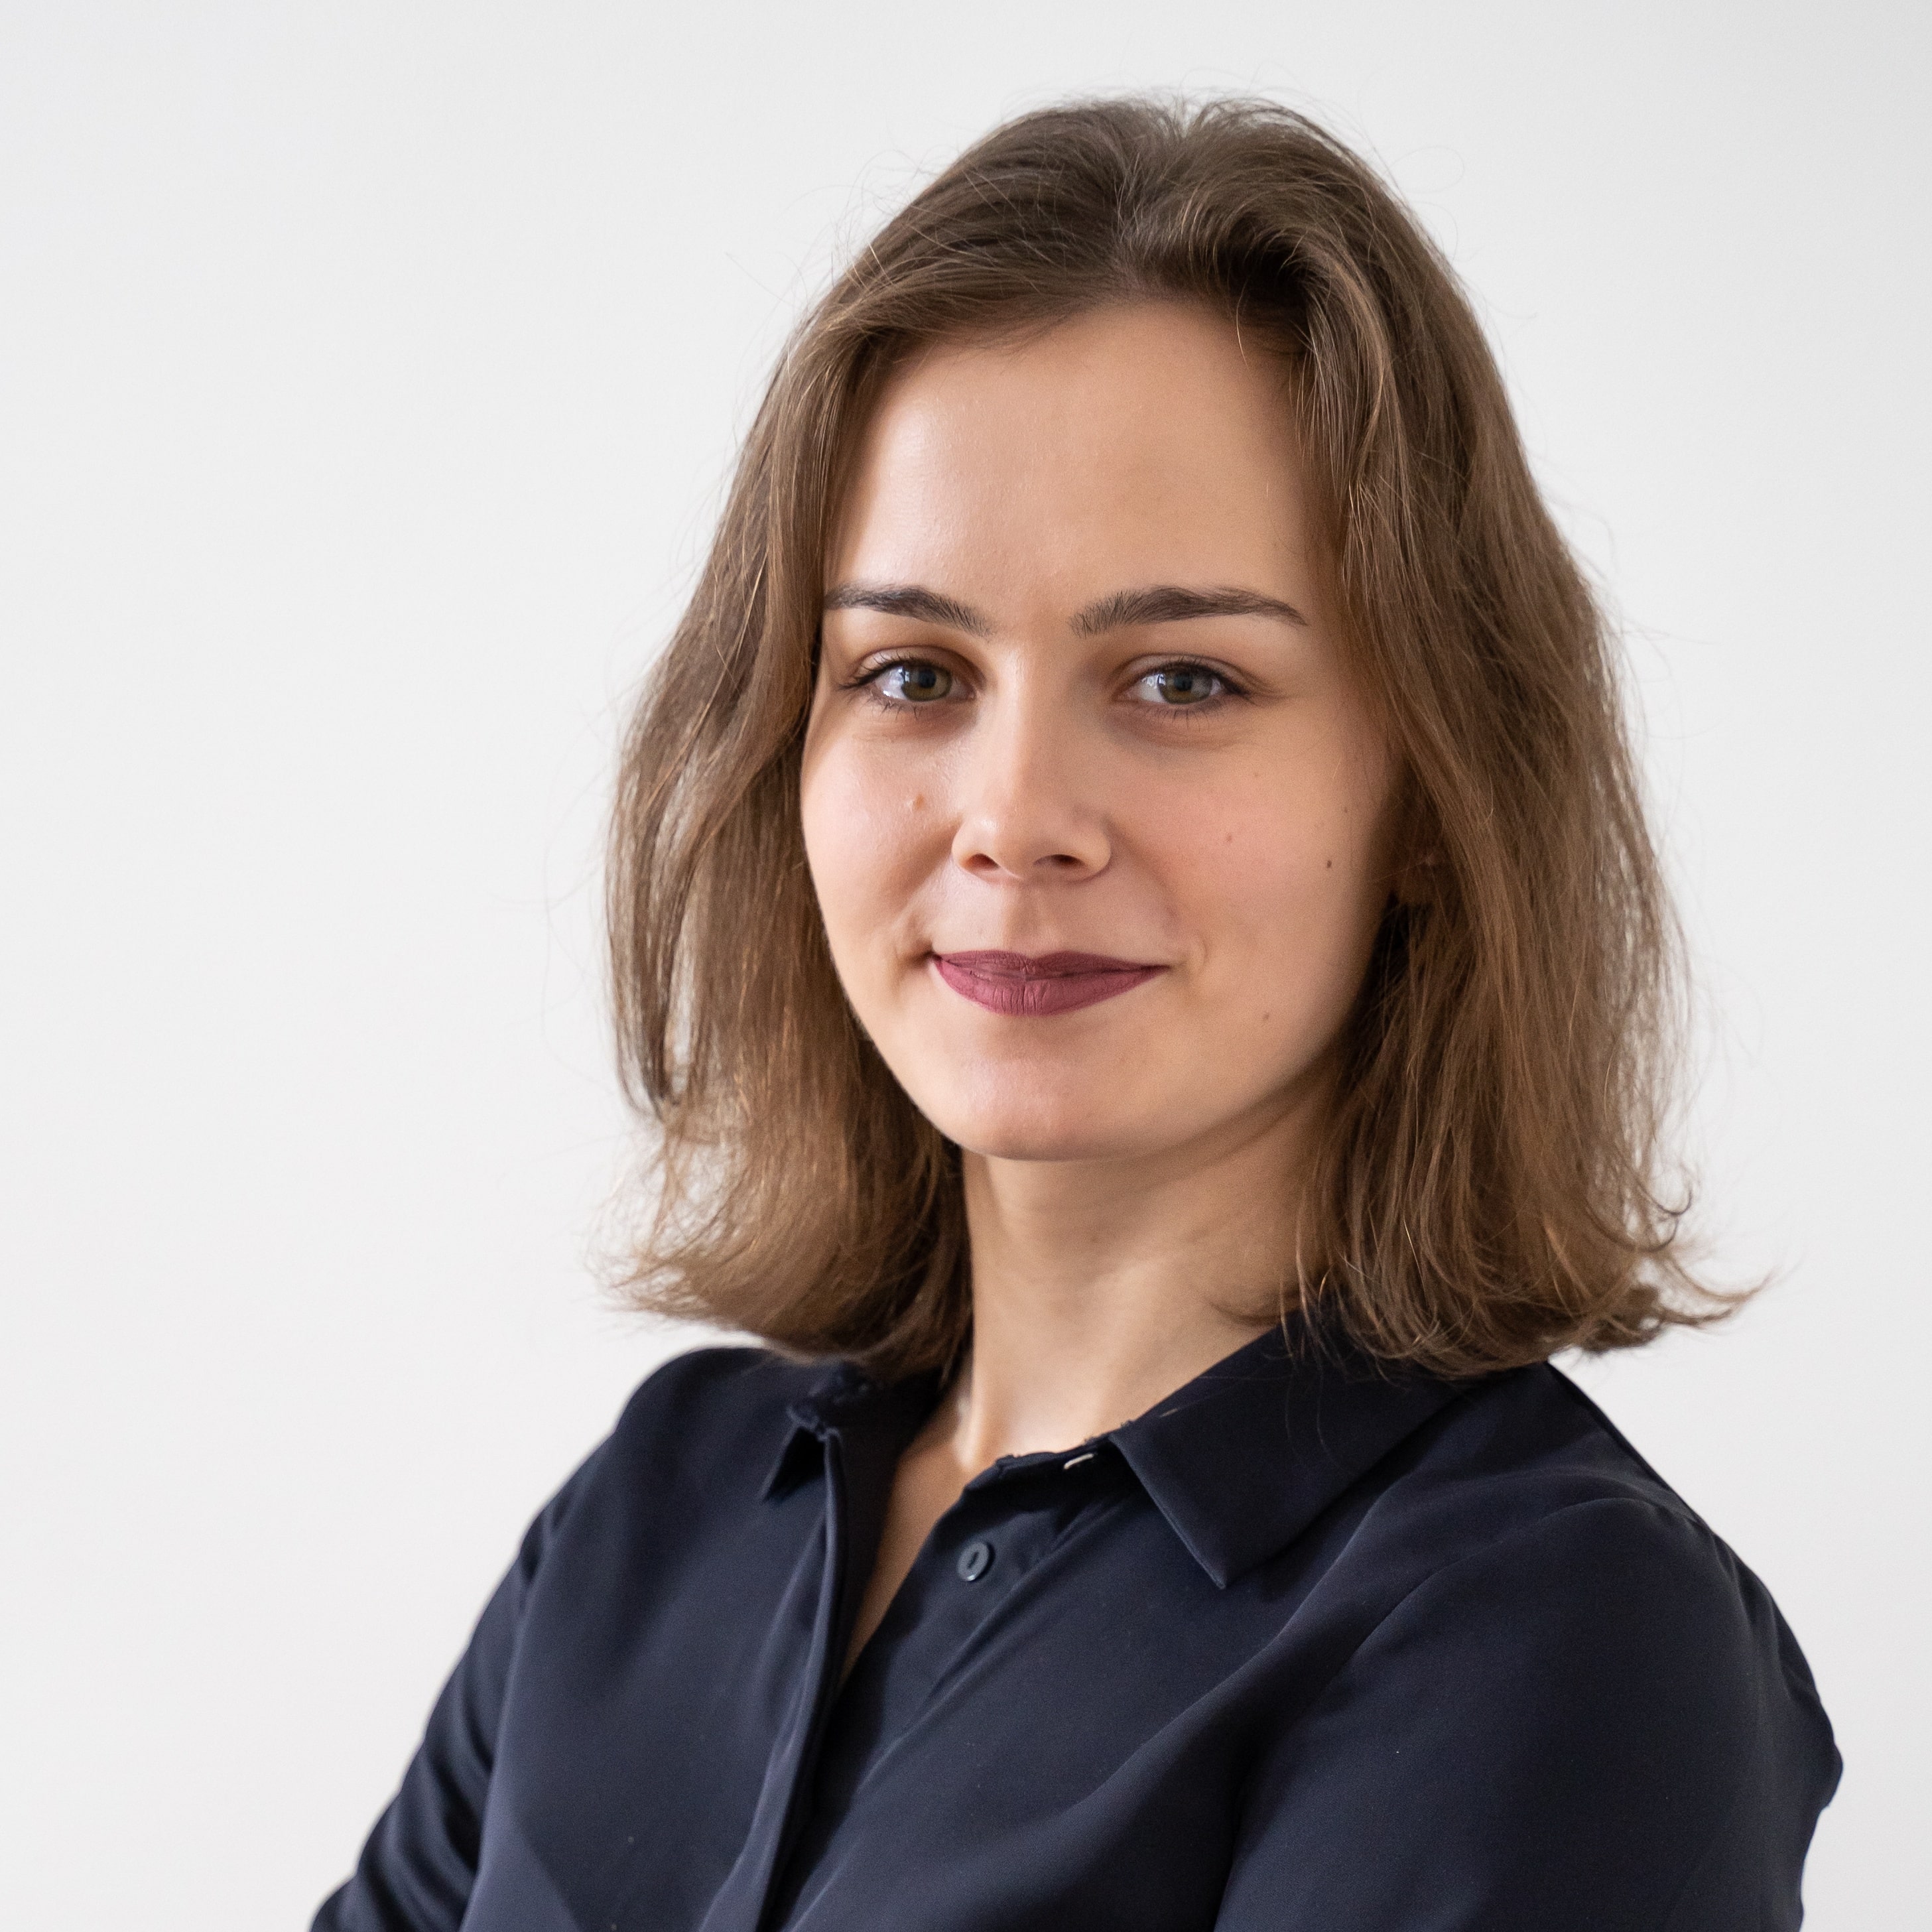 Monika Pechová, Operations Coordinator